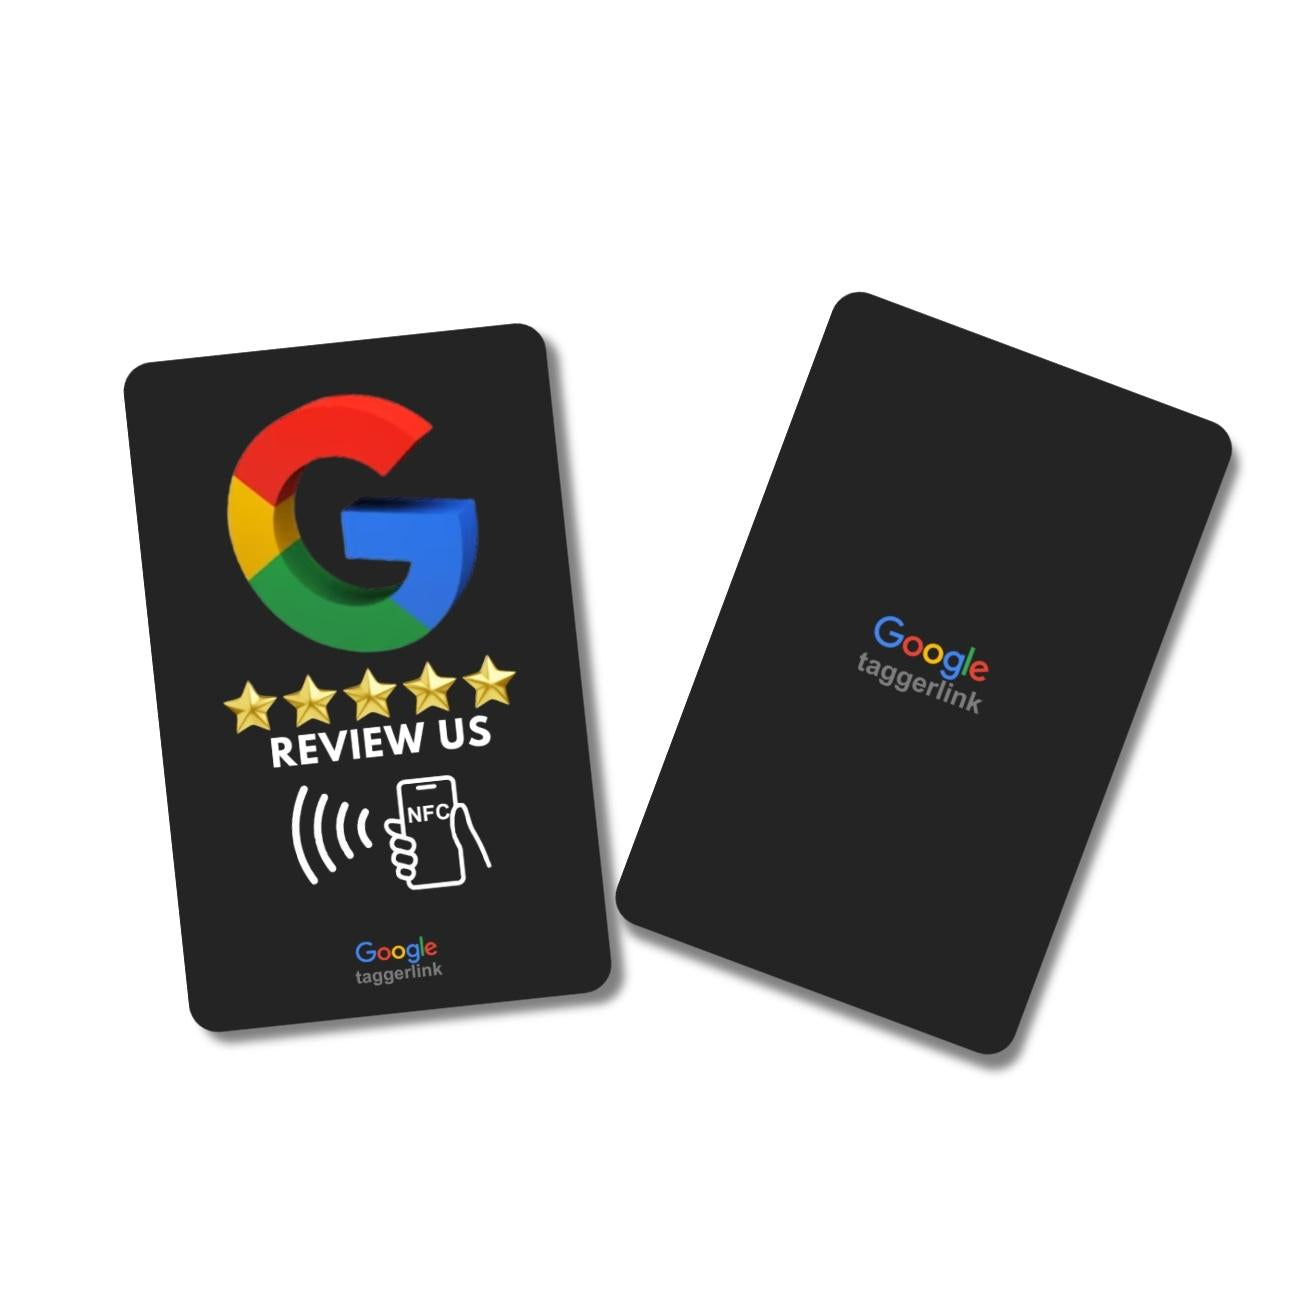 Google Review "Mi" Card